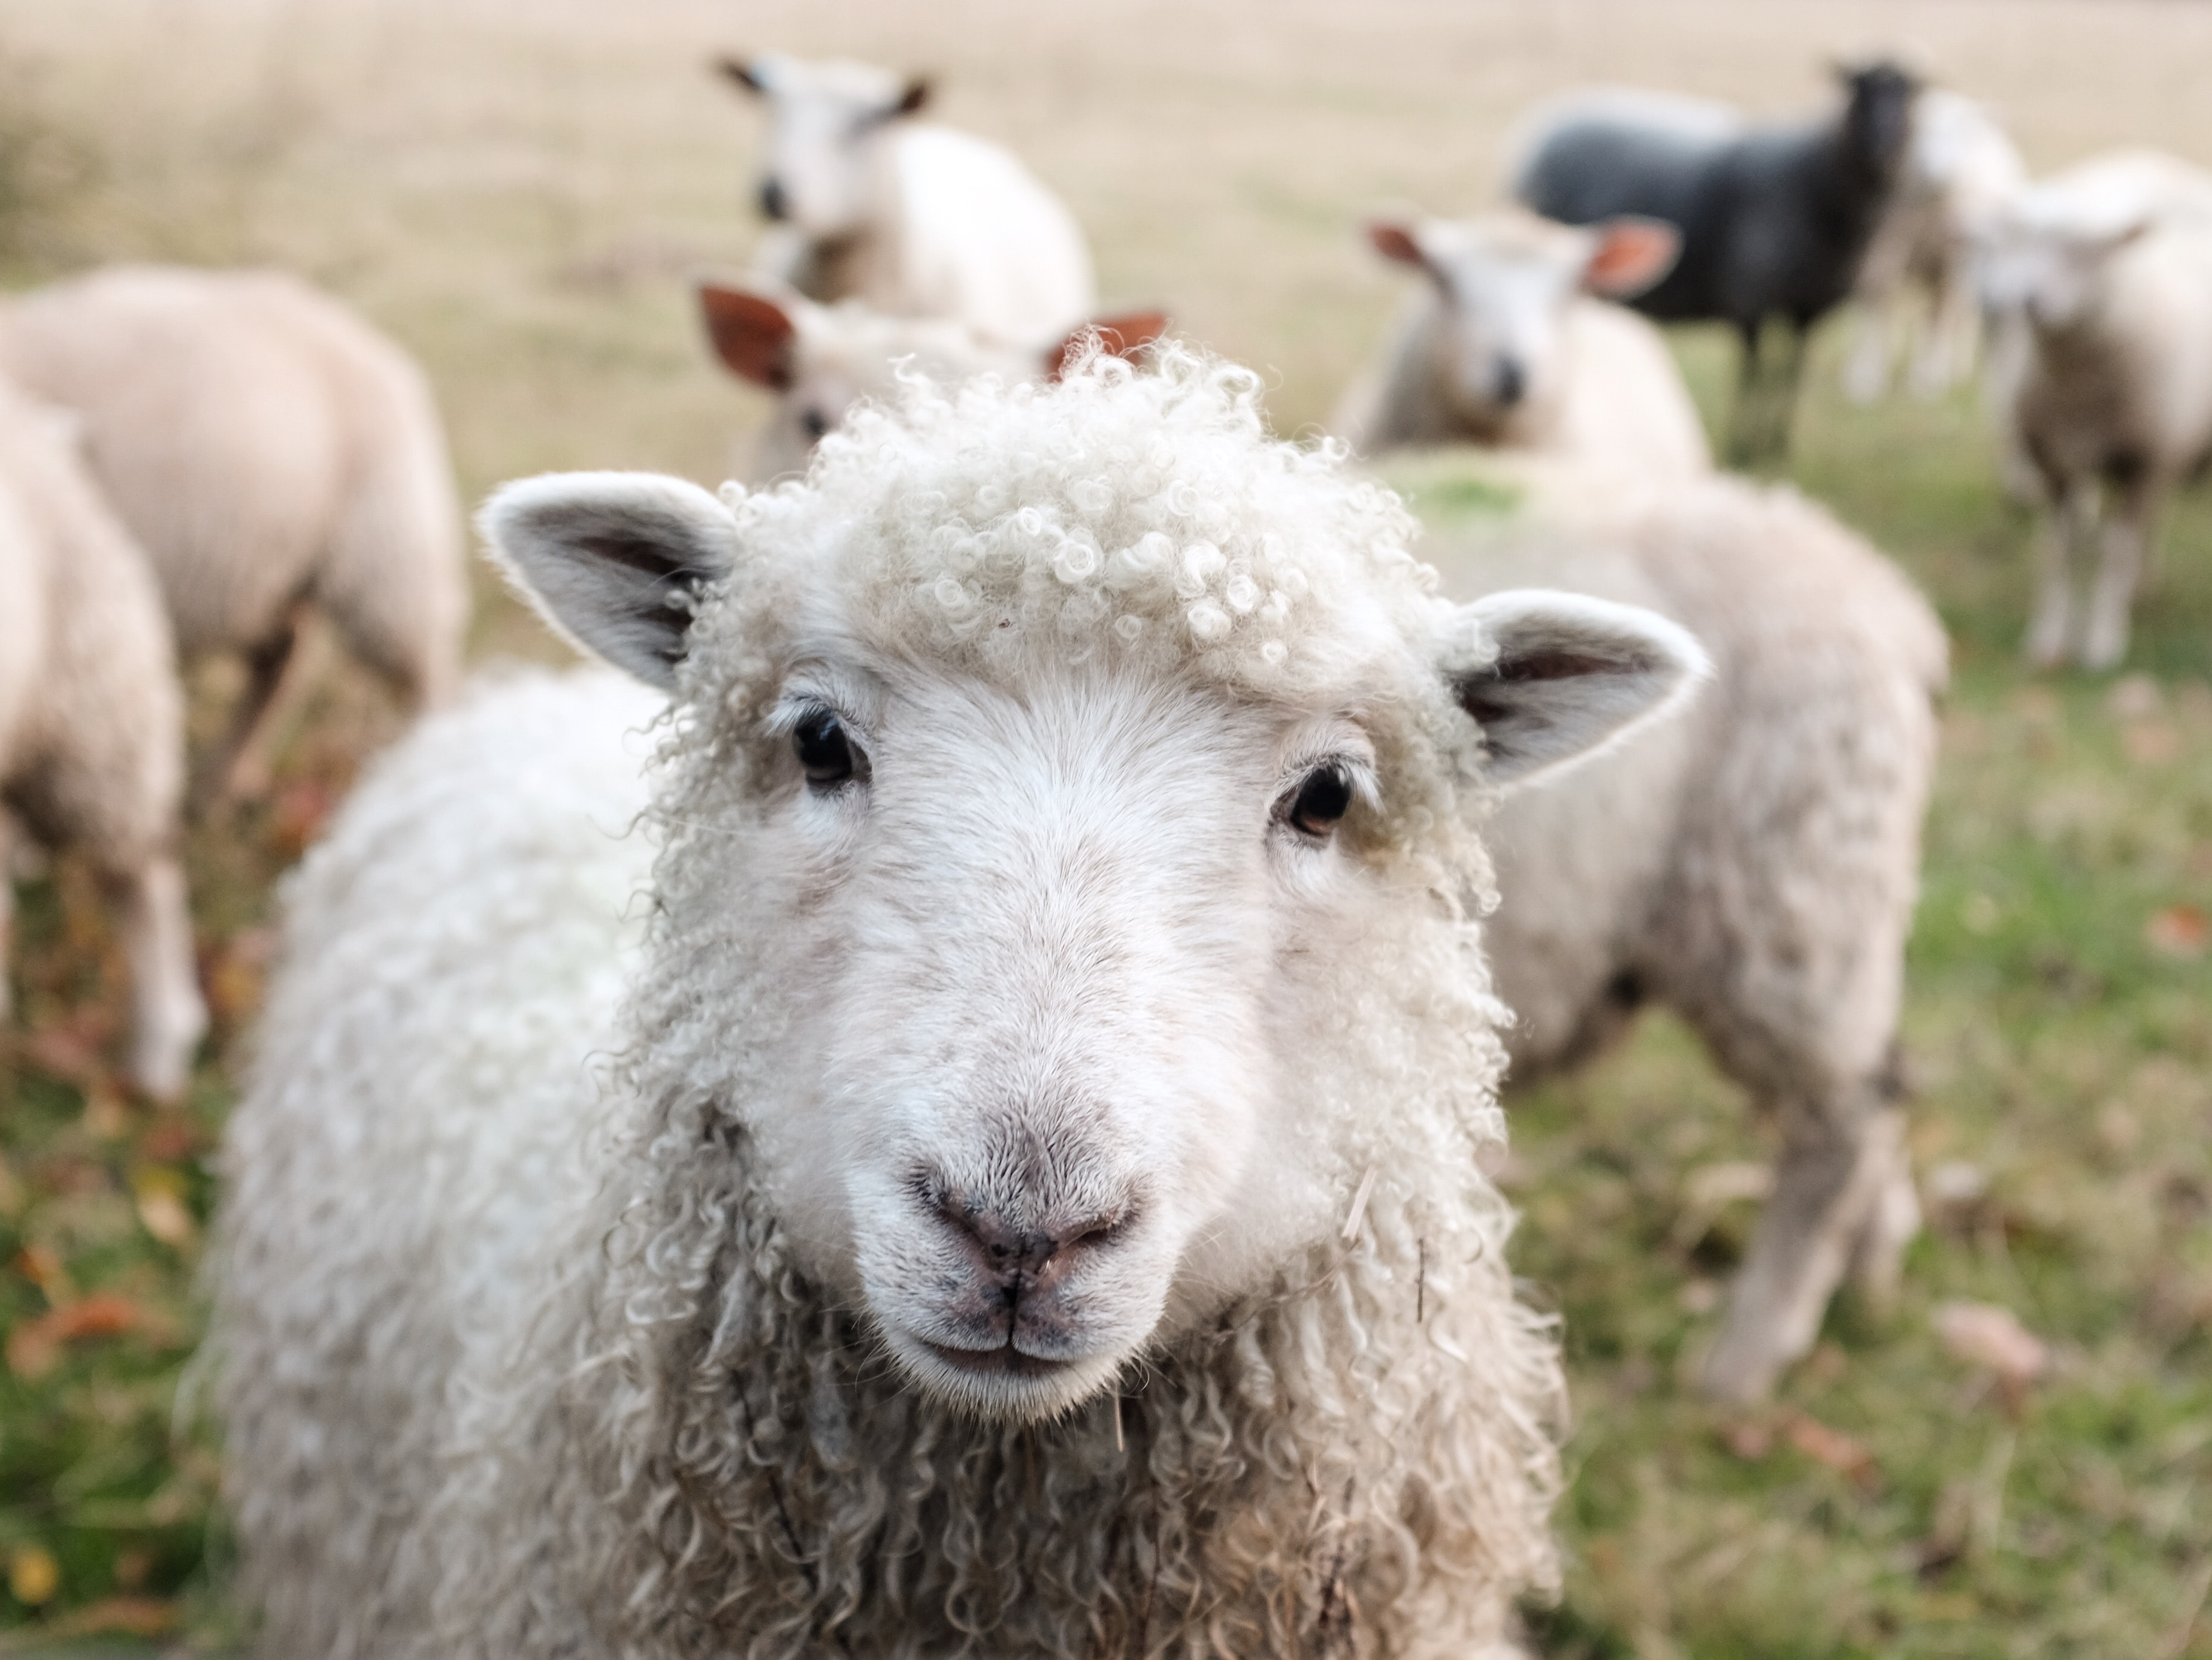 Mandarin Monday: What’s With All the Sheep Memes? A Look at Covid Slang